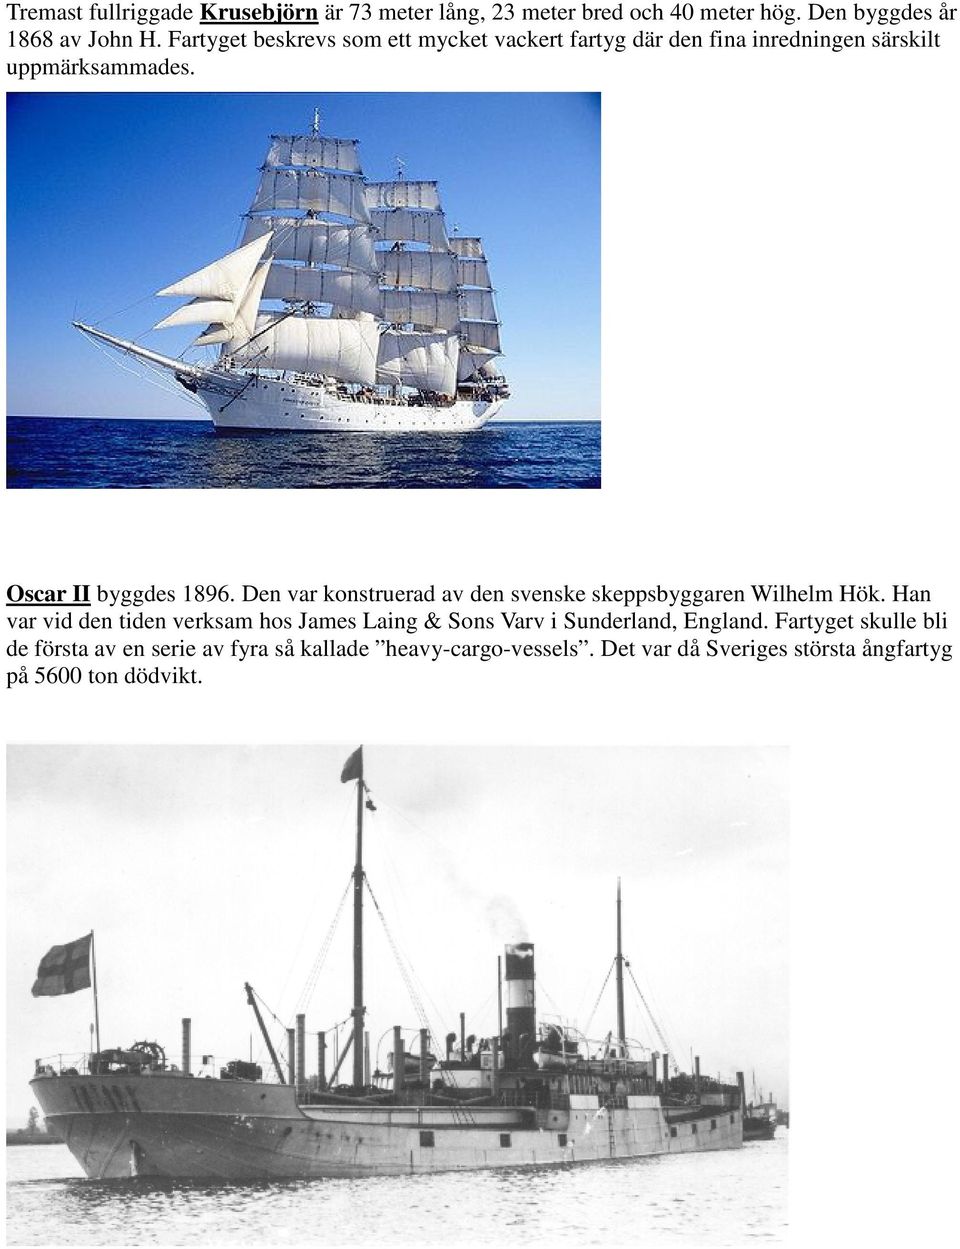 Den var konstruerad av den svenske skeppsbyggaren Wilhelm Hök.